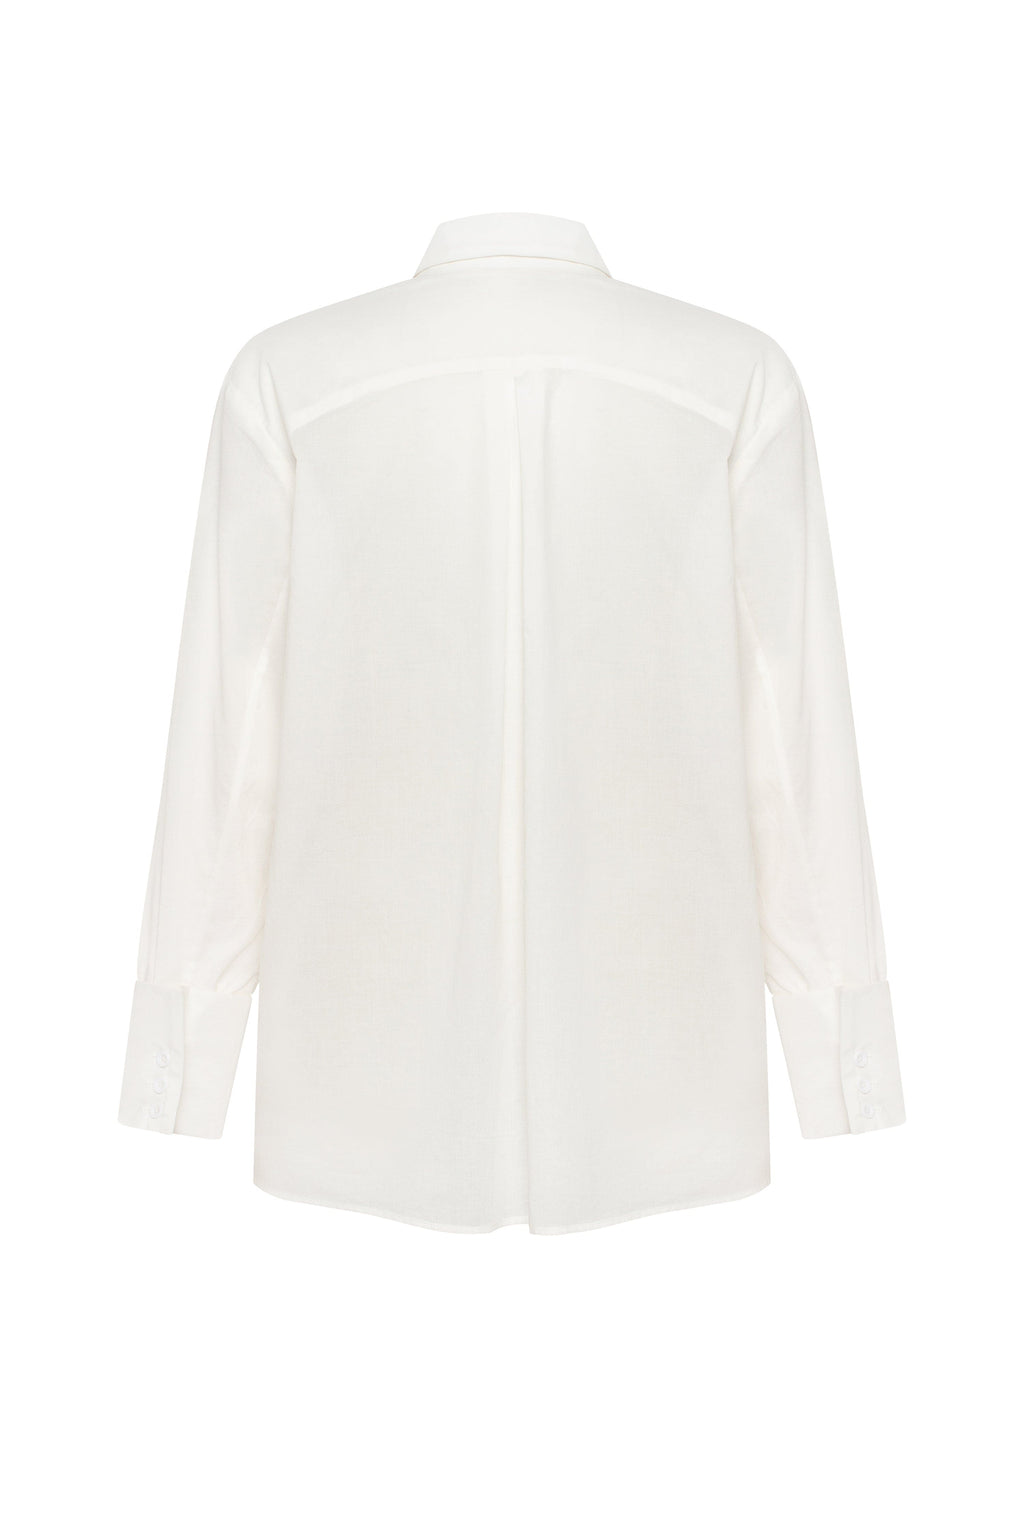 Classic white blouse, Xo Xo